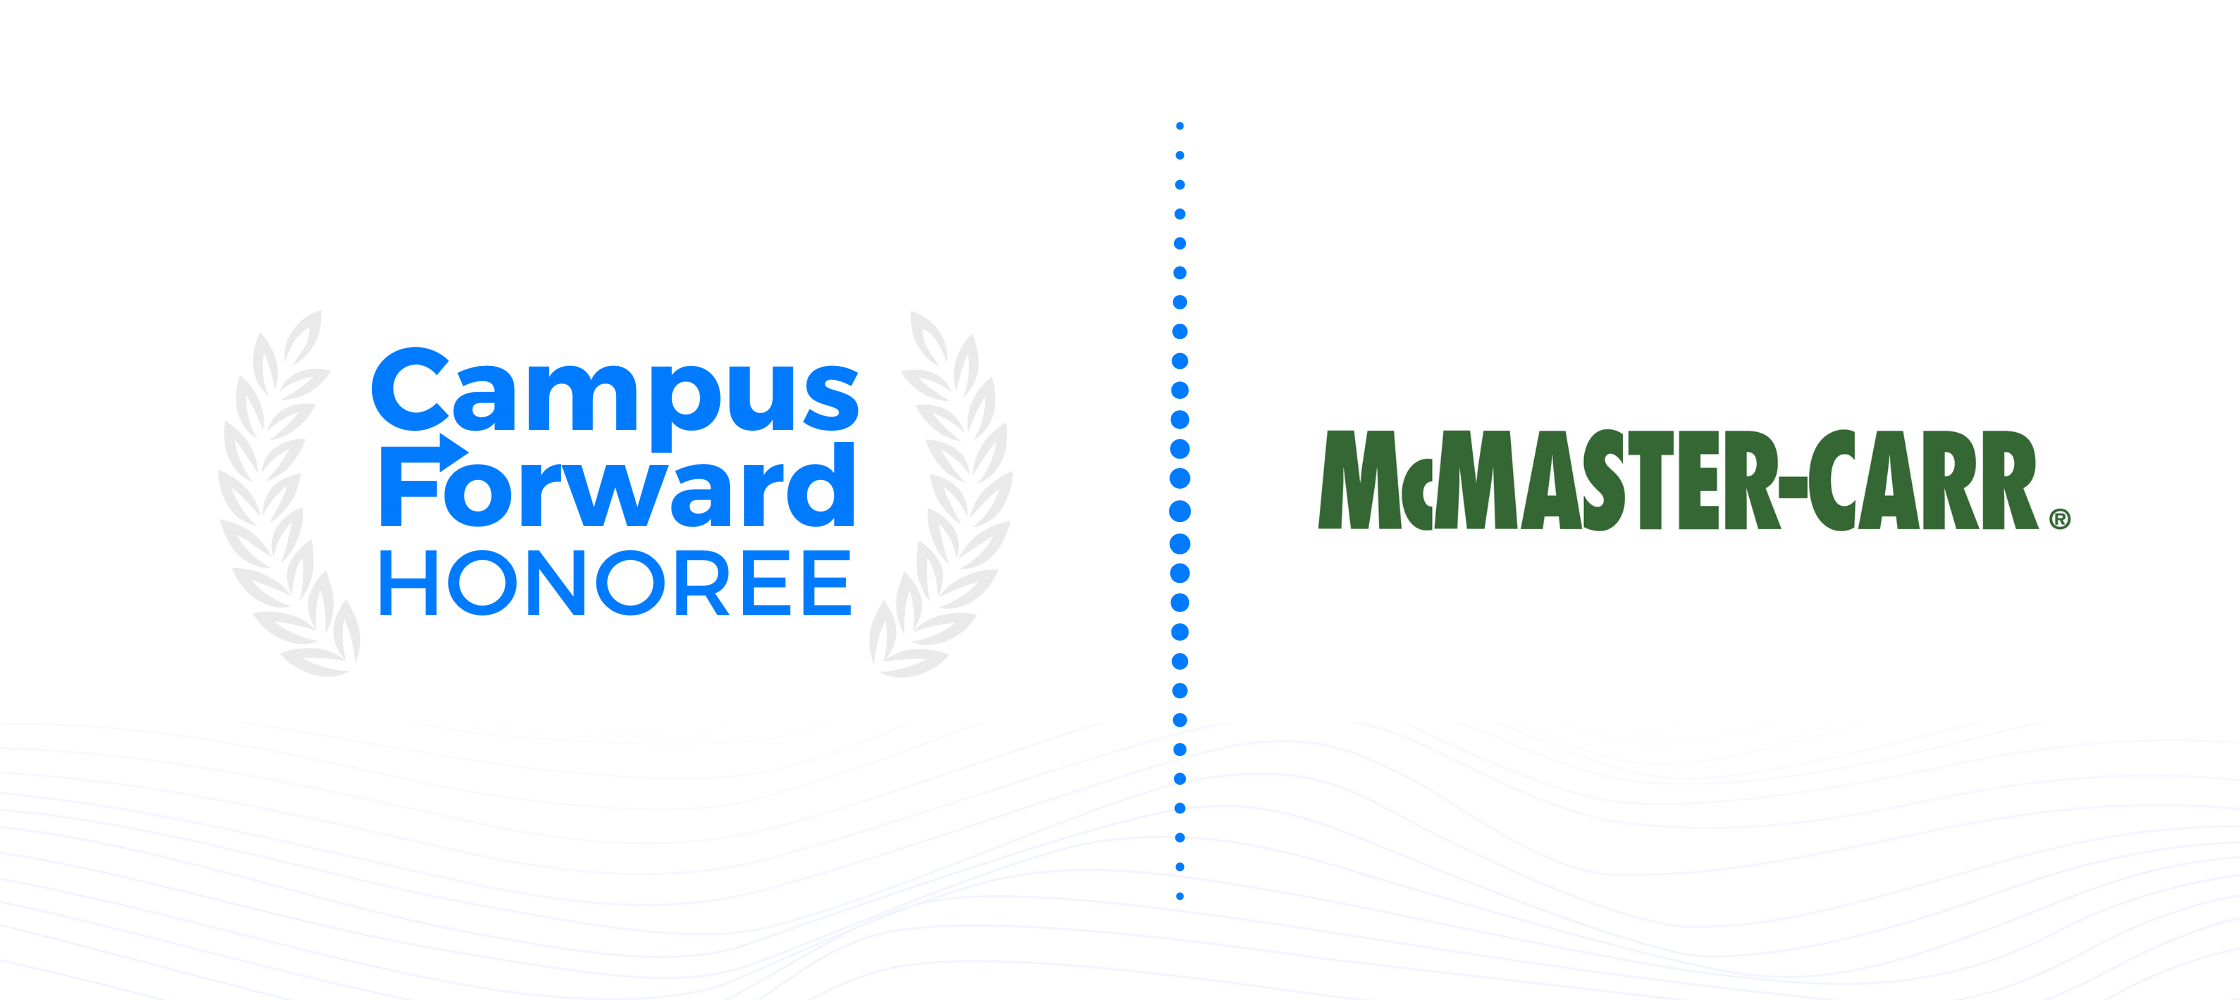 Campus Forward Honoree - McMaster-Carr